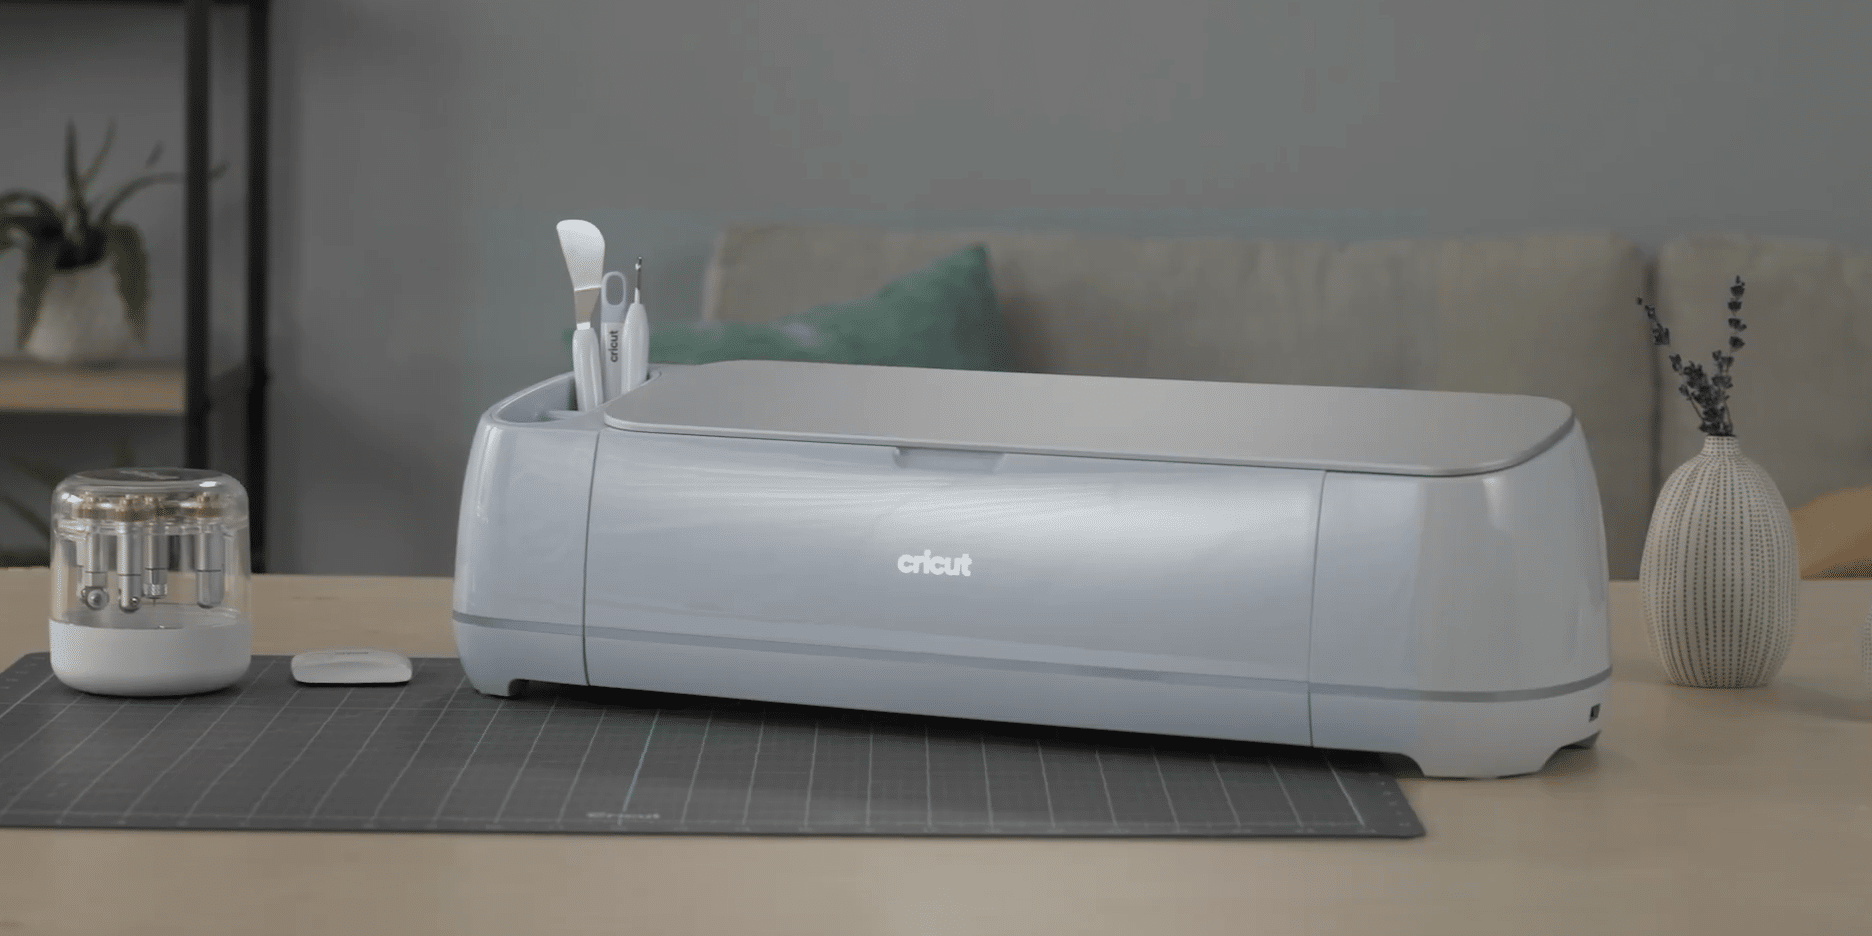 Cricut Maker - Smart Cutting Machine - With 10X Cutting Force, Cuts 300+  Materials, Create 3D Art, Home Decor & More, Bluetooth Connectivity